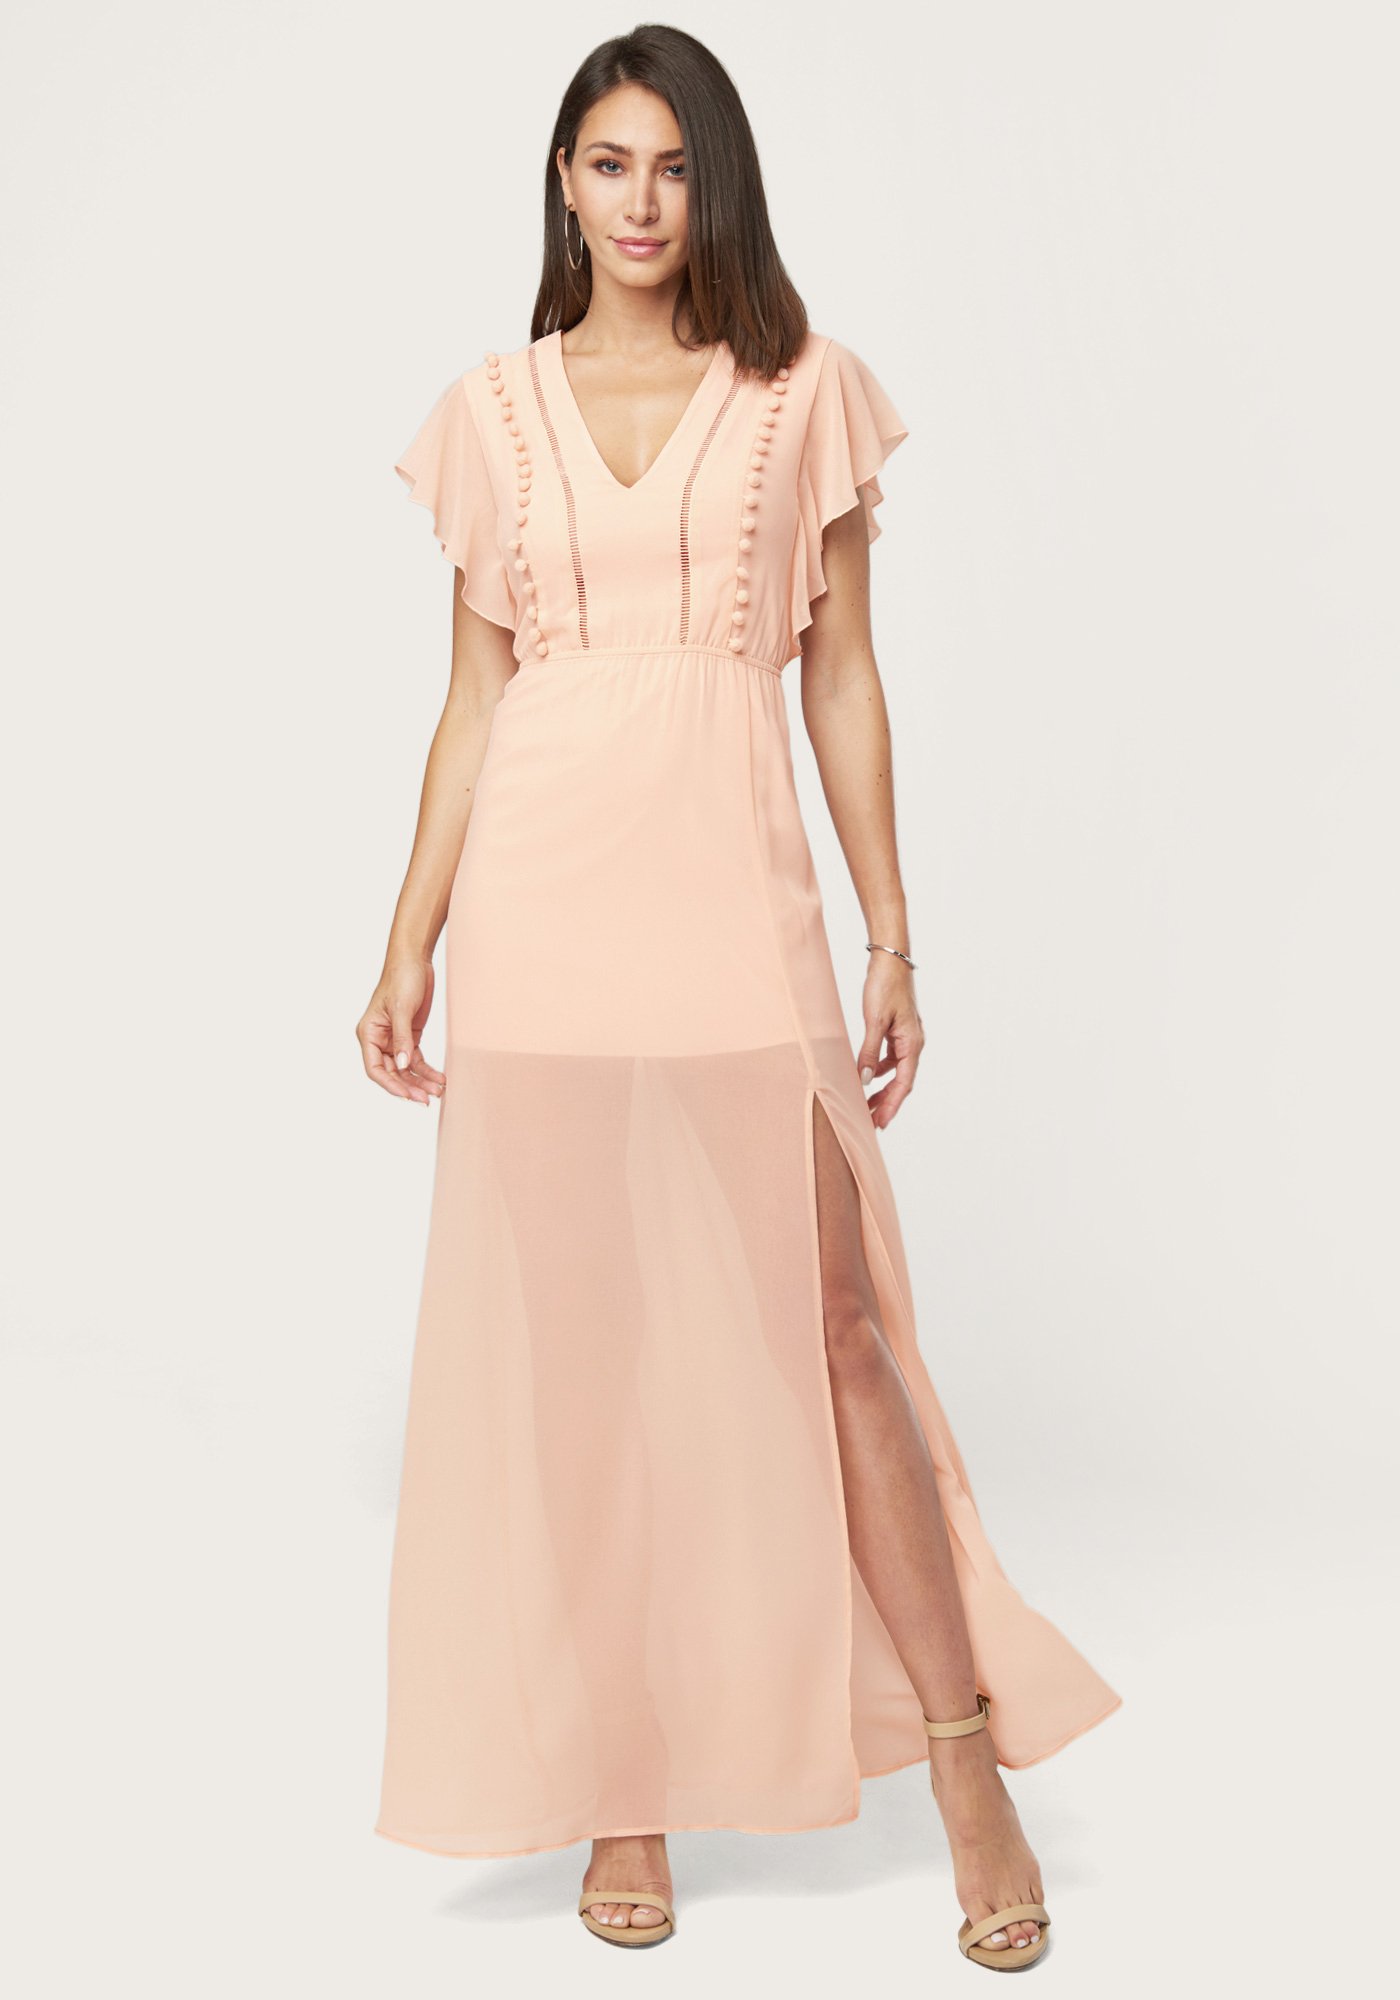 Bebe Women's Pom-Pom Detail Maxi Dress, Size 2 in Pale Blush Polyester